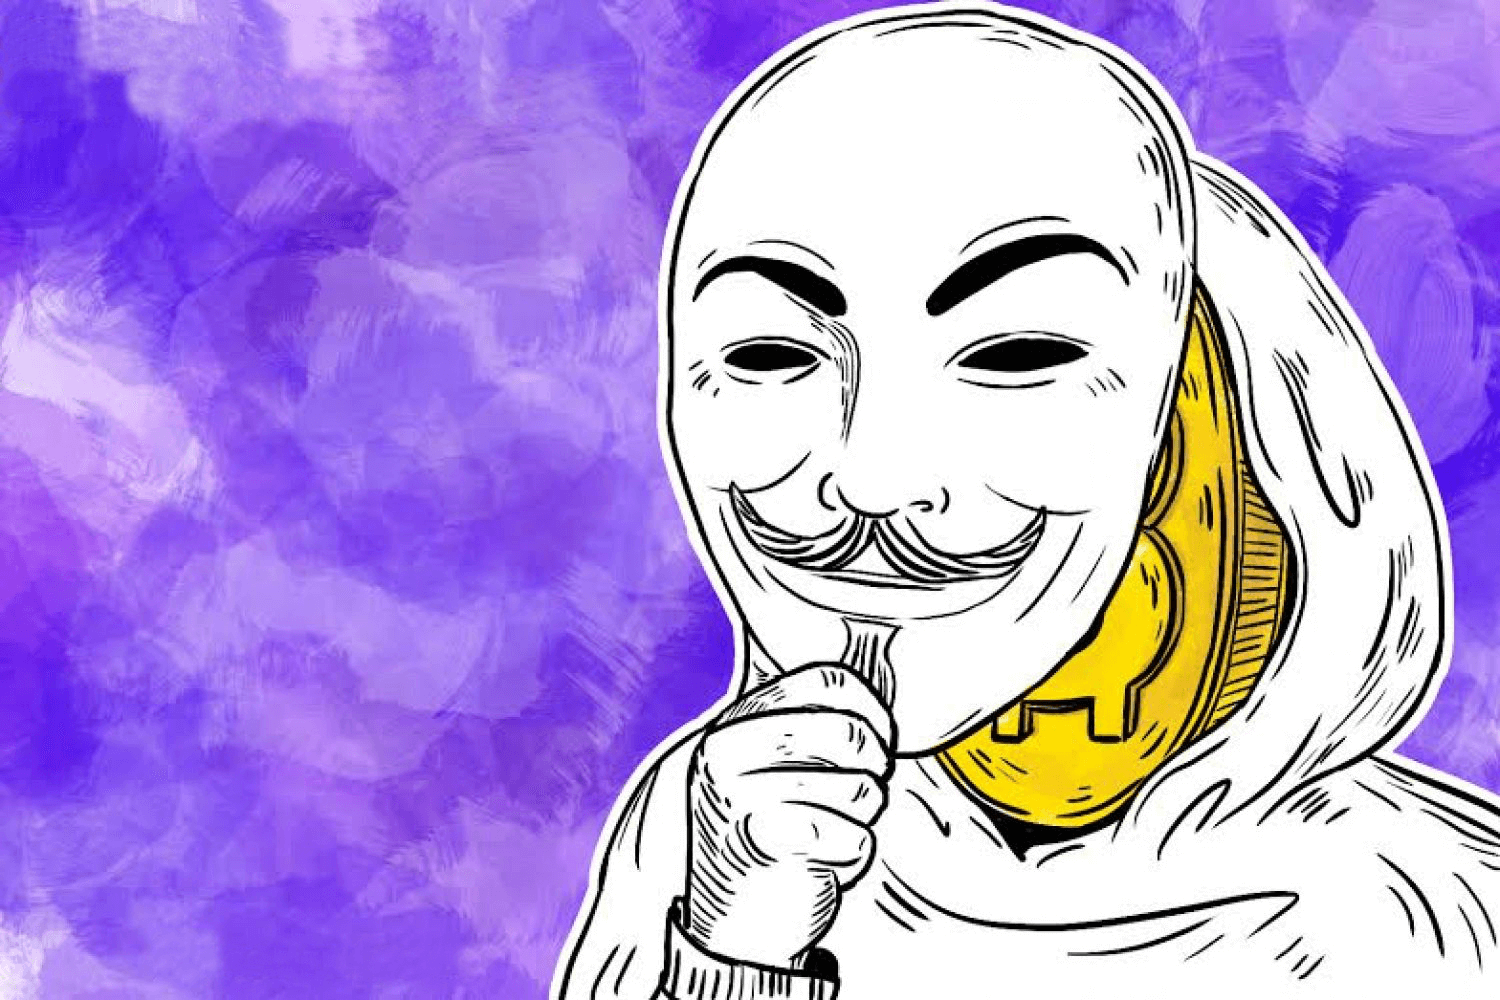 Köp bitcoin anonymt